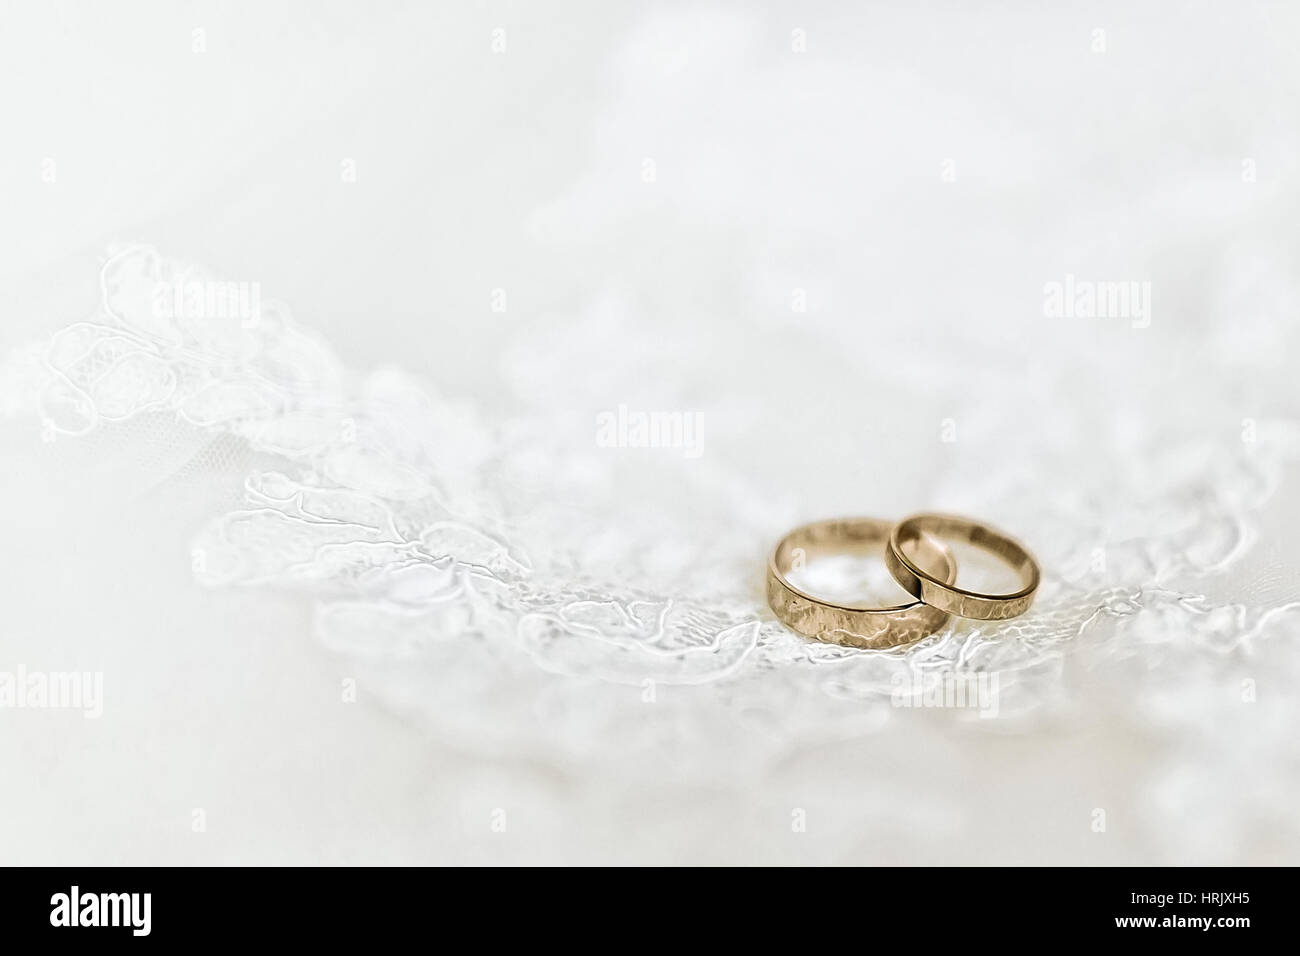 Wedding rings on wedding dress, close-up Stock Photo